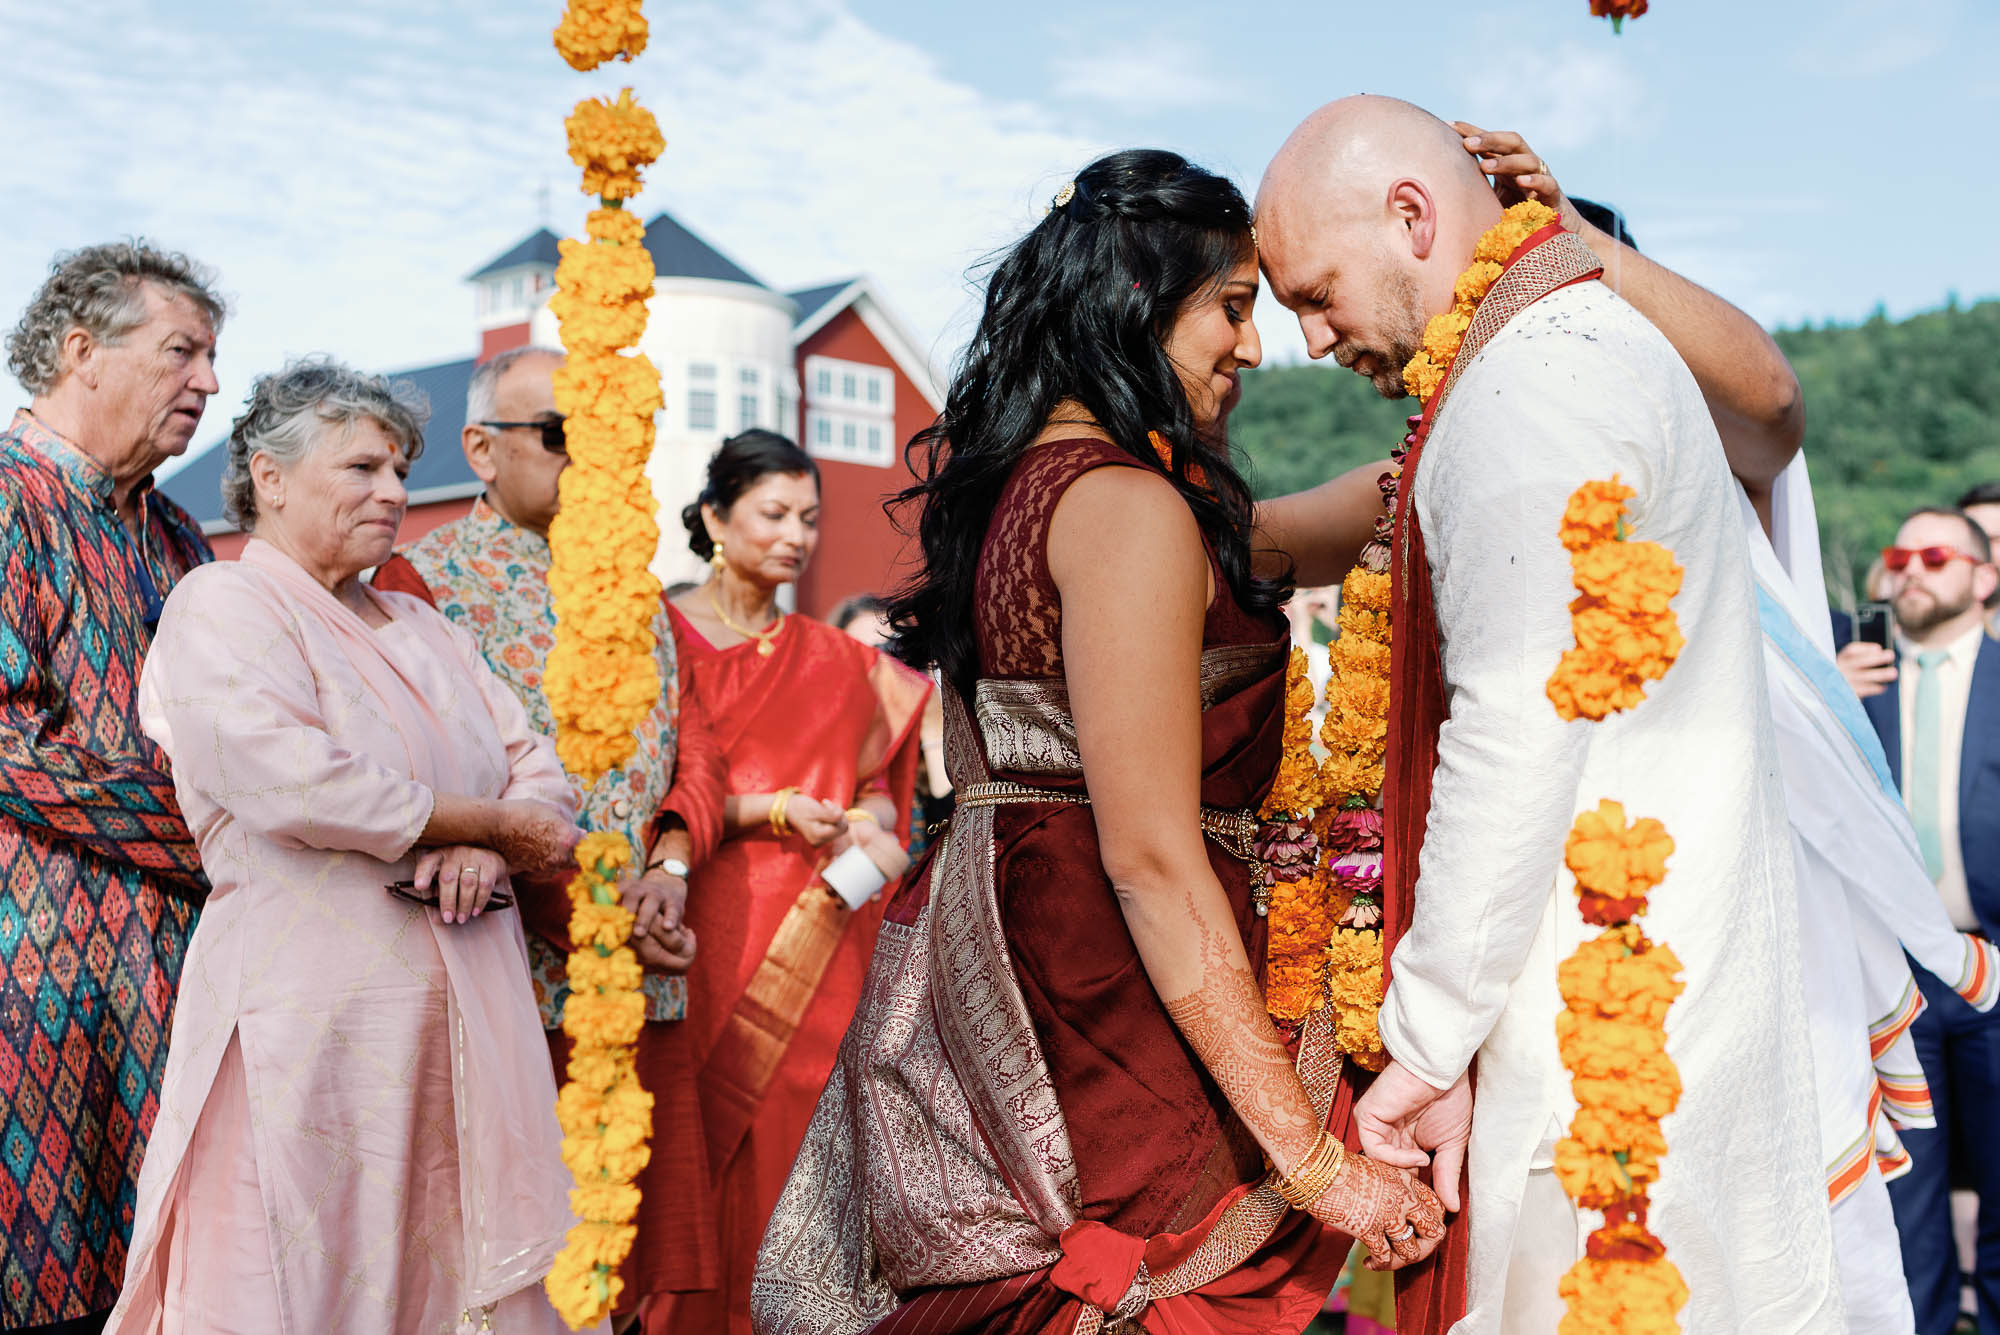 hindu wedding ceremony for indian wedding at maquam barn winery vt